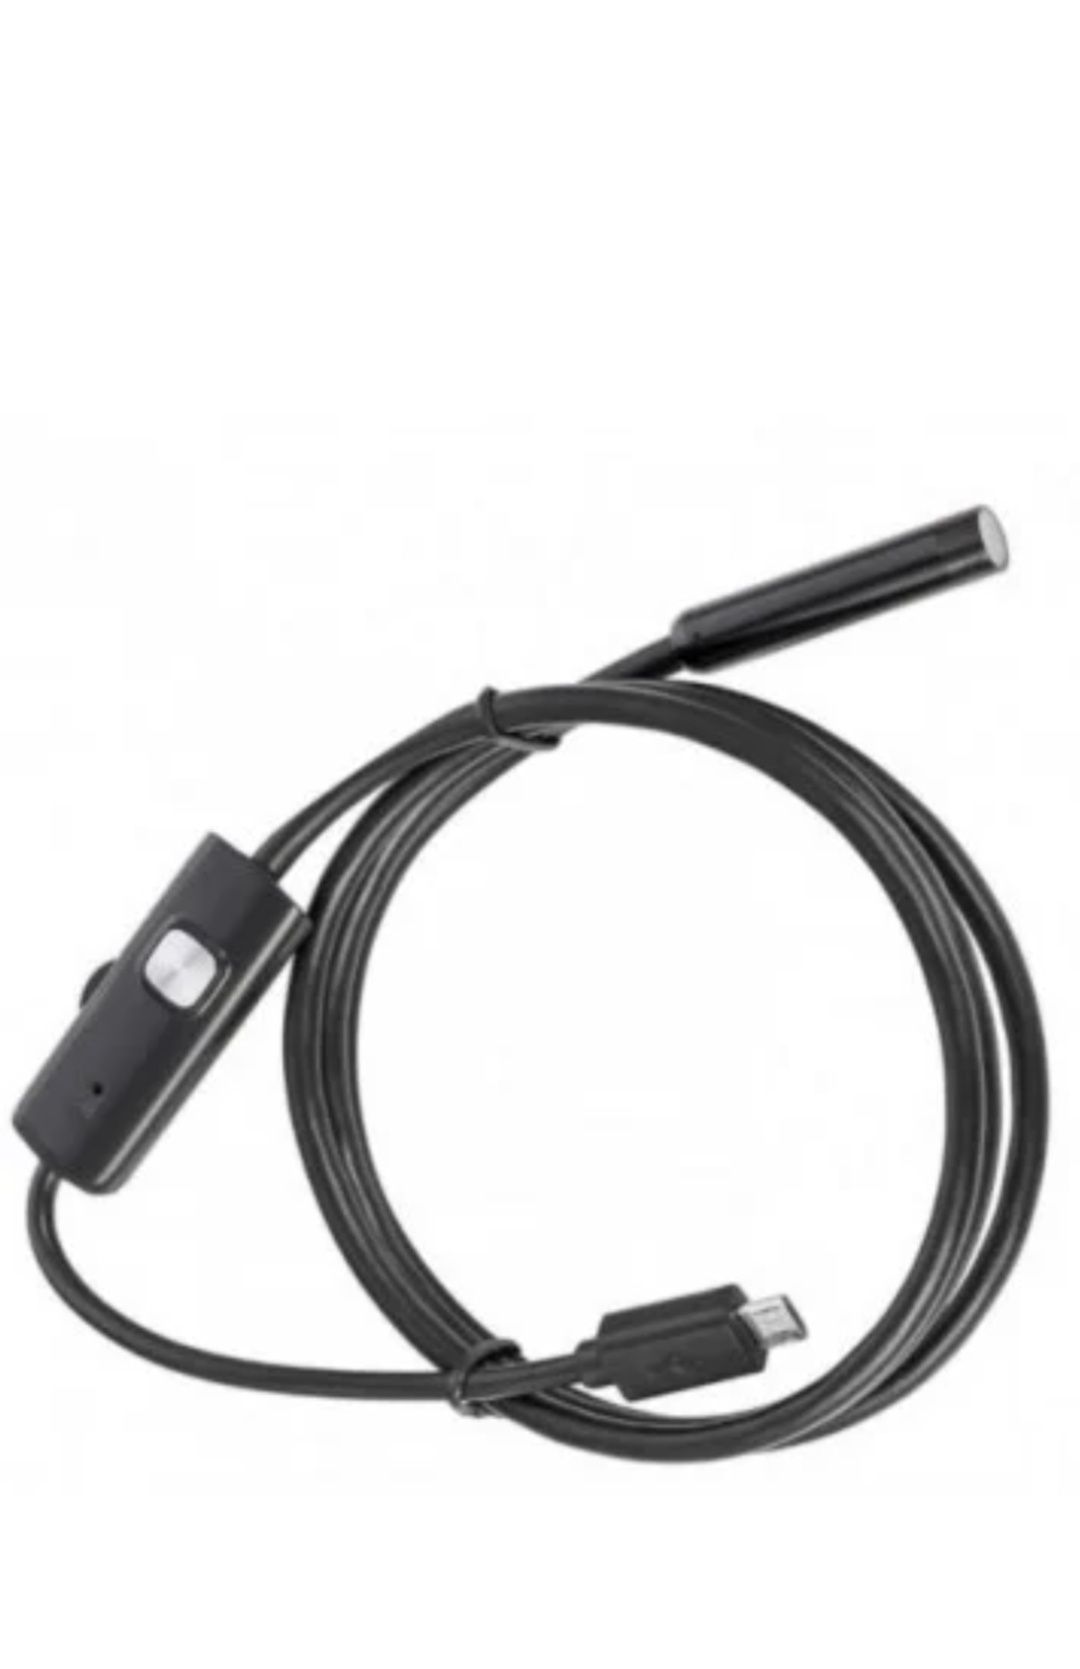 Гибкая камера купить. USB эндоскоп Орбита ot-sme12. Эндоскоп carcam Endo-02m. Эндоскоп гибкая камера USB для Android и PC, 5м. Эндоскоп USB (640*480, 2 М).